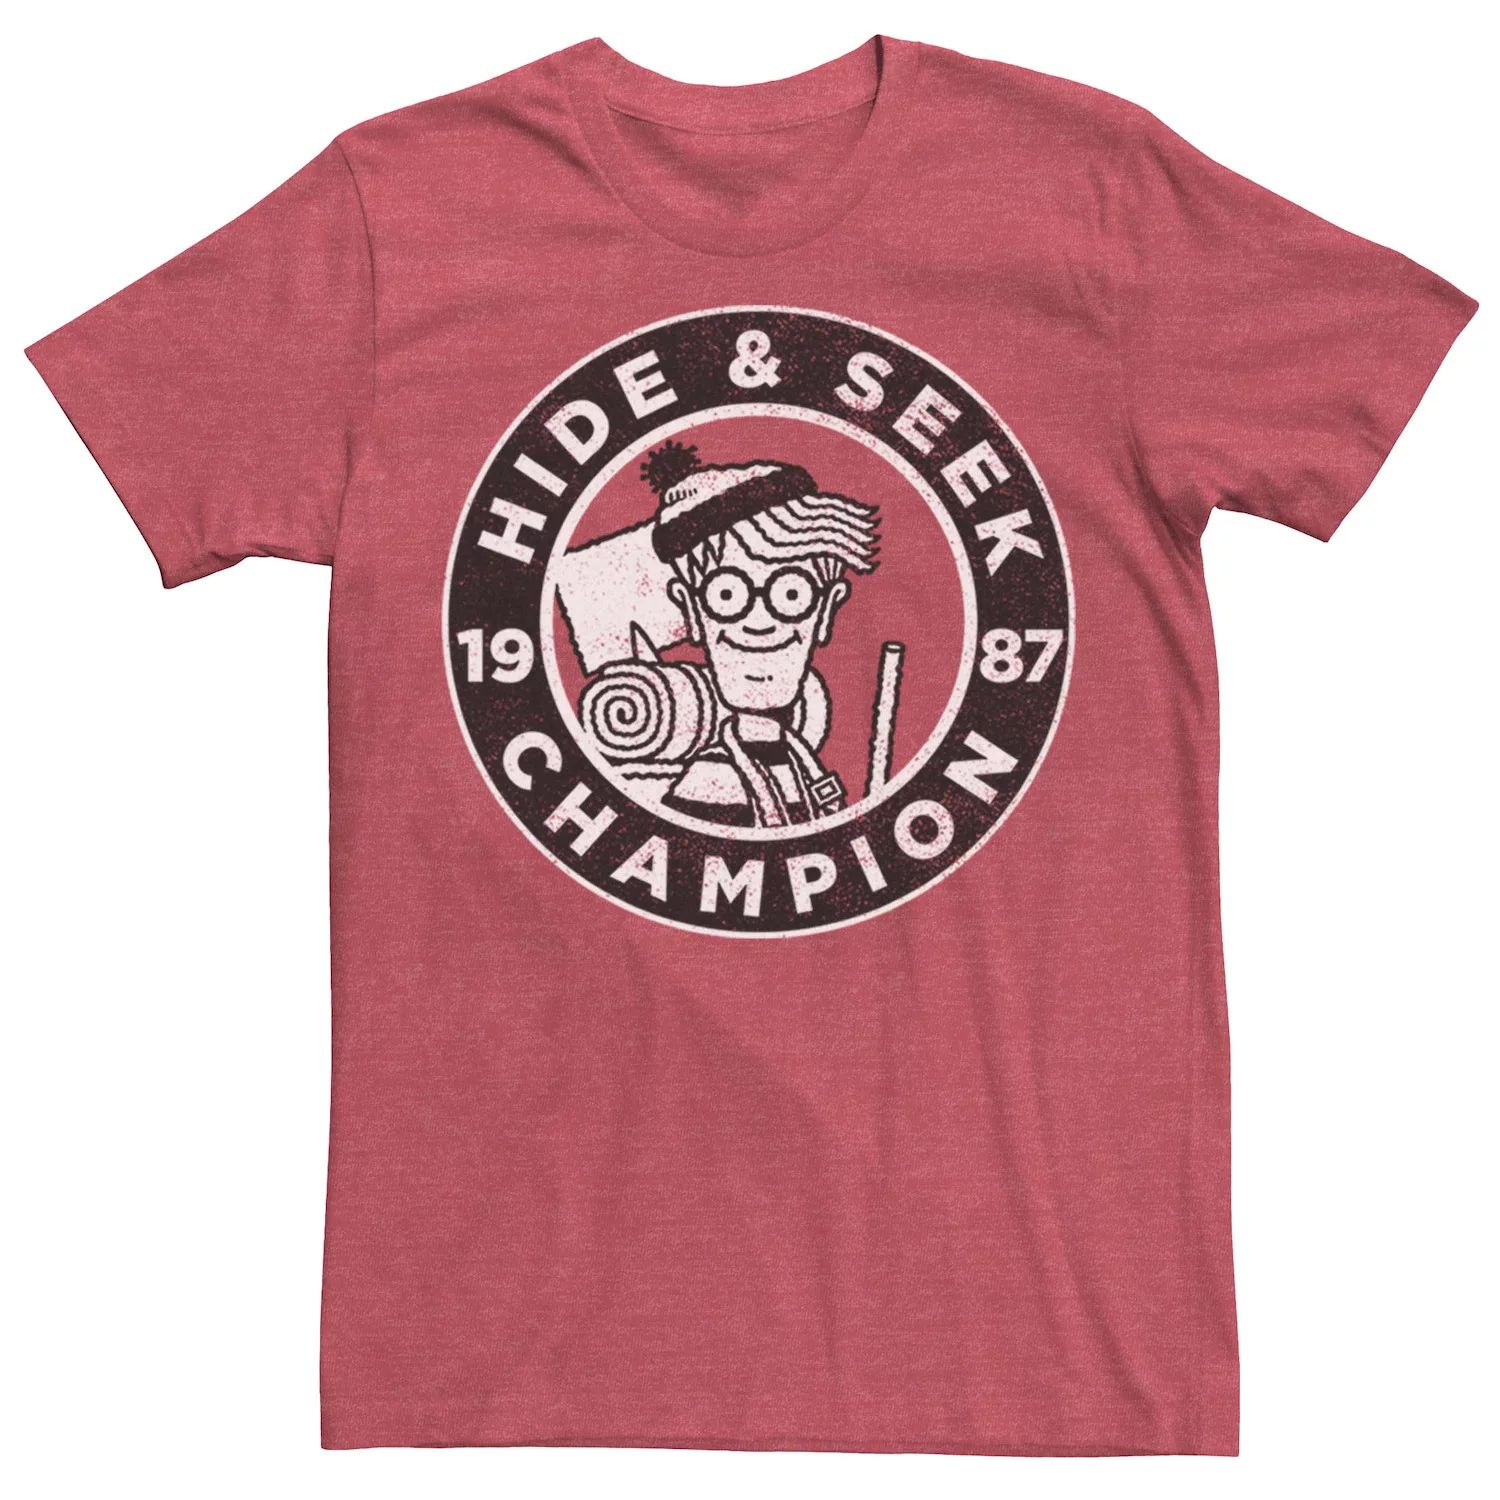 Мужская футболка с рисунком «Wher's Waldo Hide And Seek Champion» Licensed Character